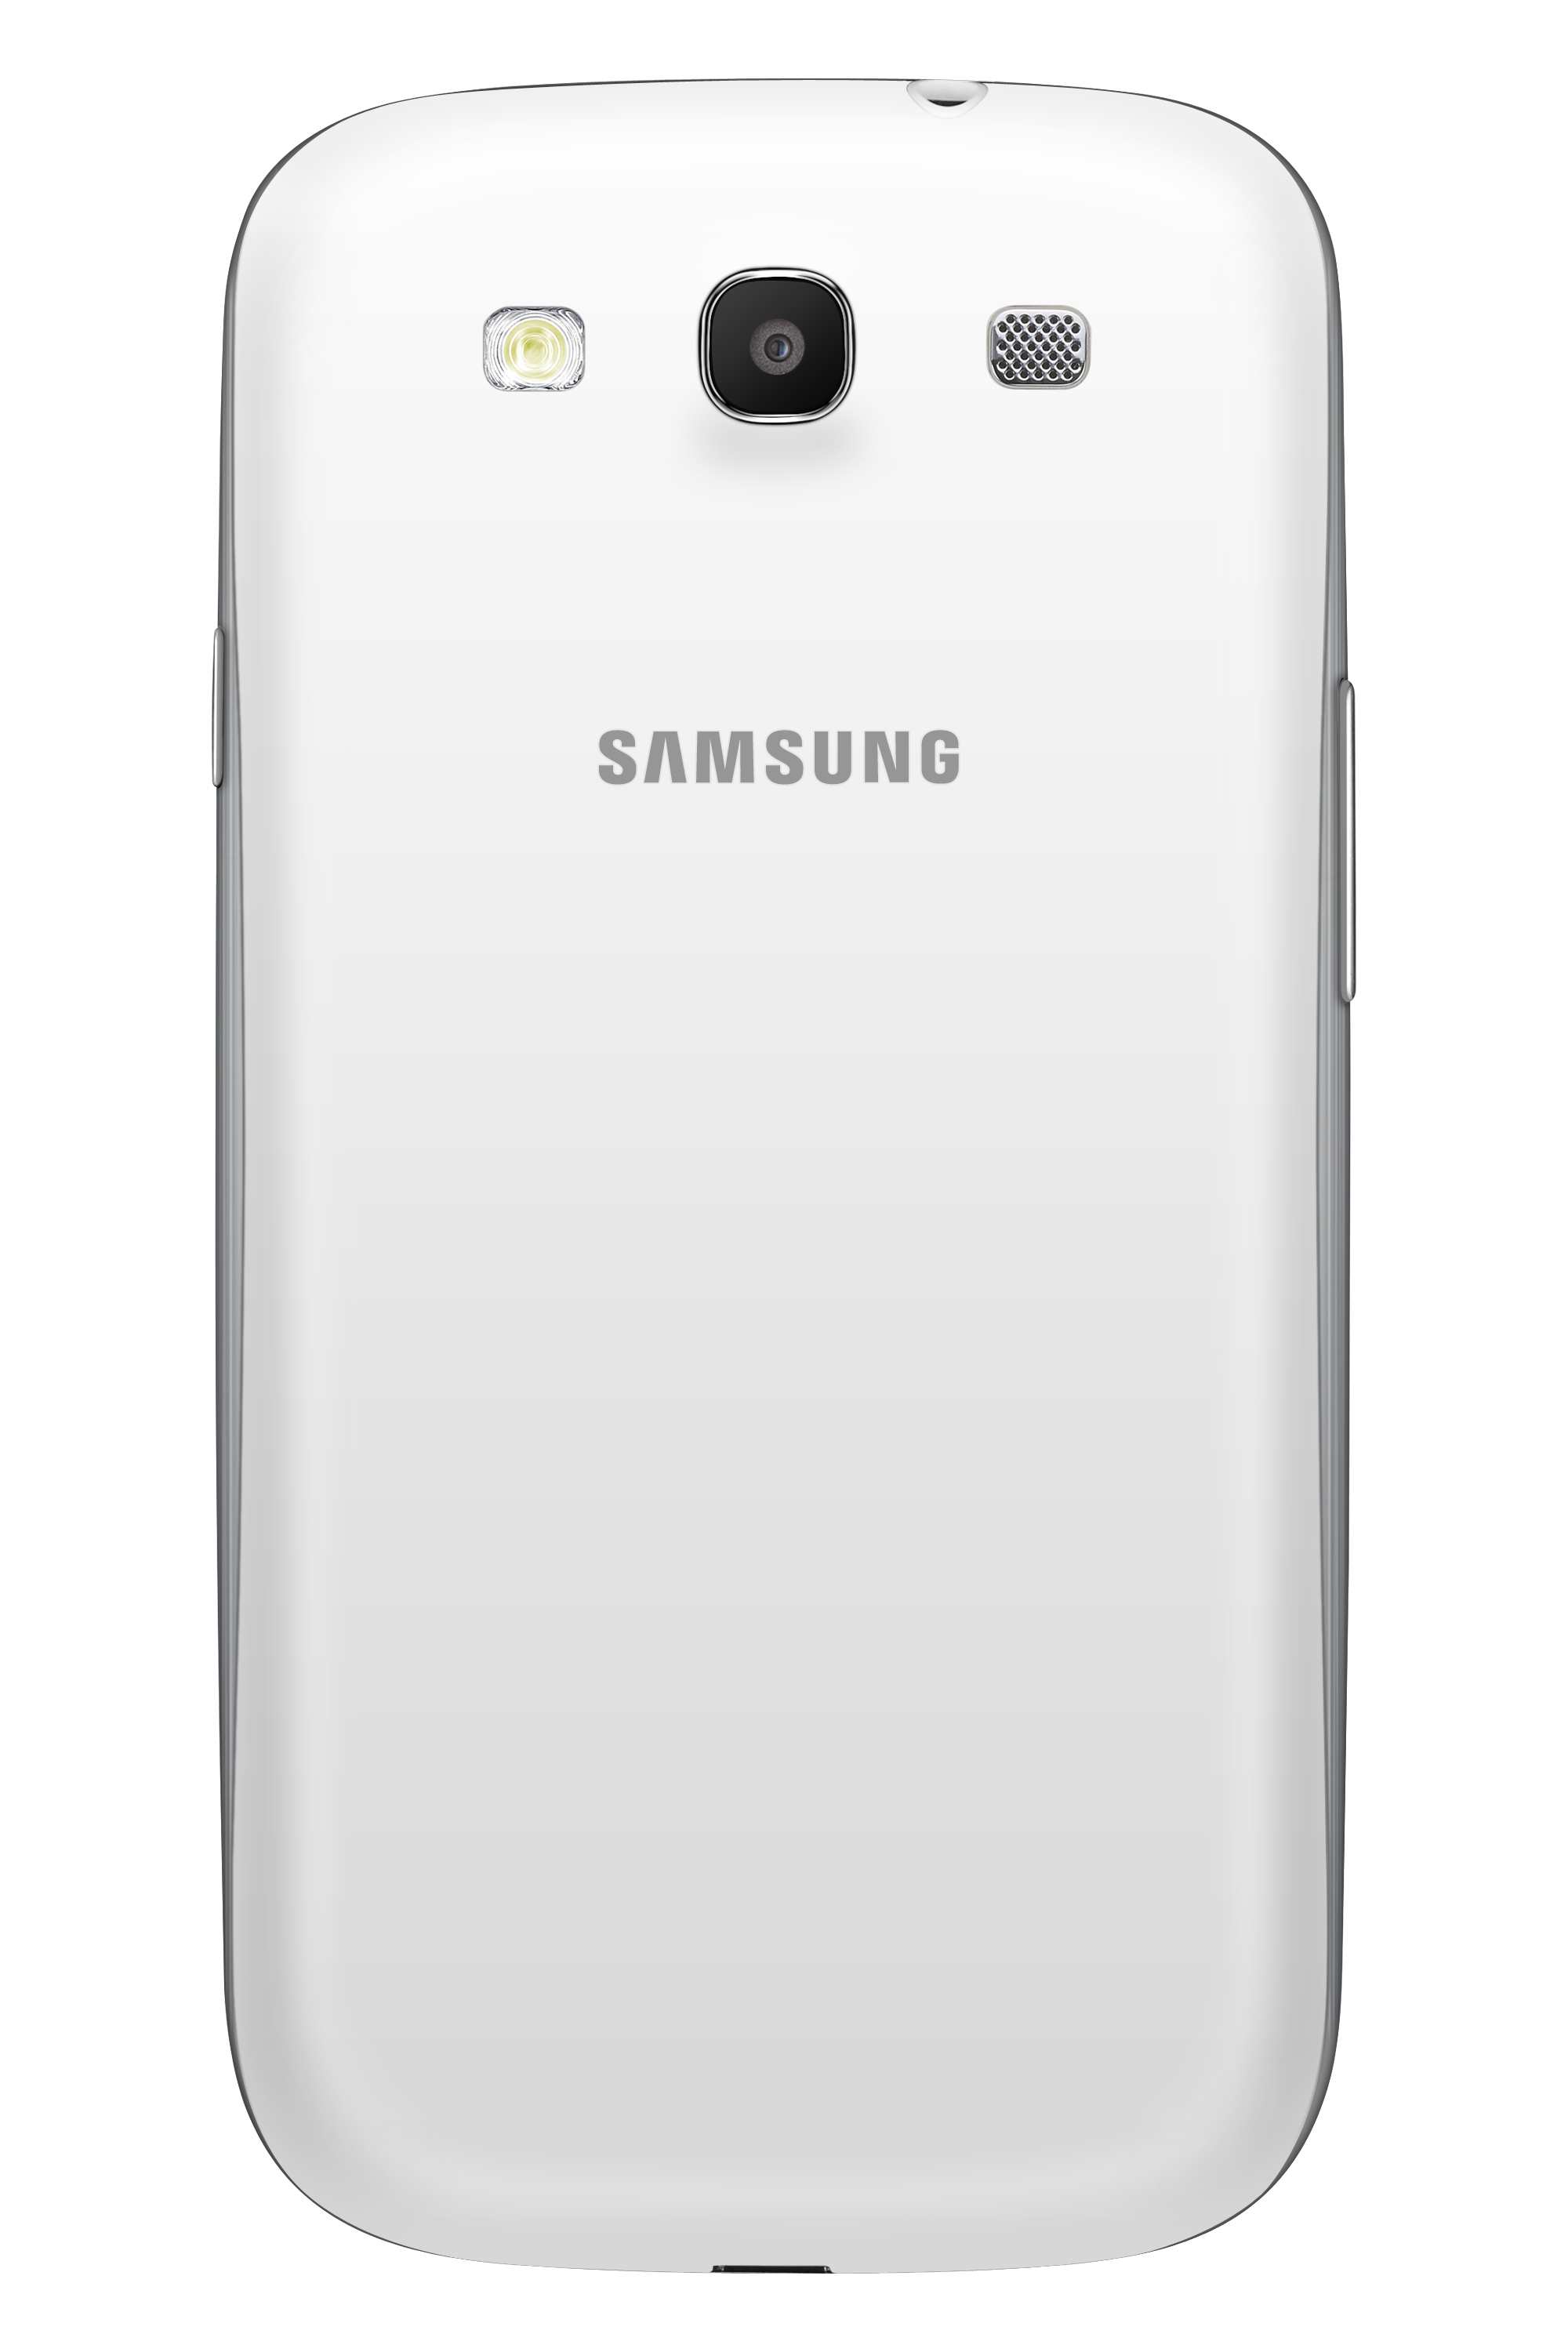 Самсунг 1 3. Samsung Galaxy s3 Neo Plus. Samsung Galaxy i9300. Samsung gt-i9300i. Samsung Galaxy s III Neo Plus.